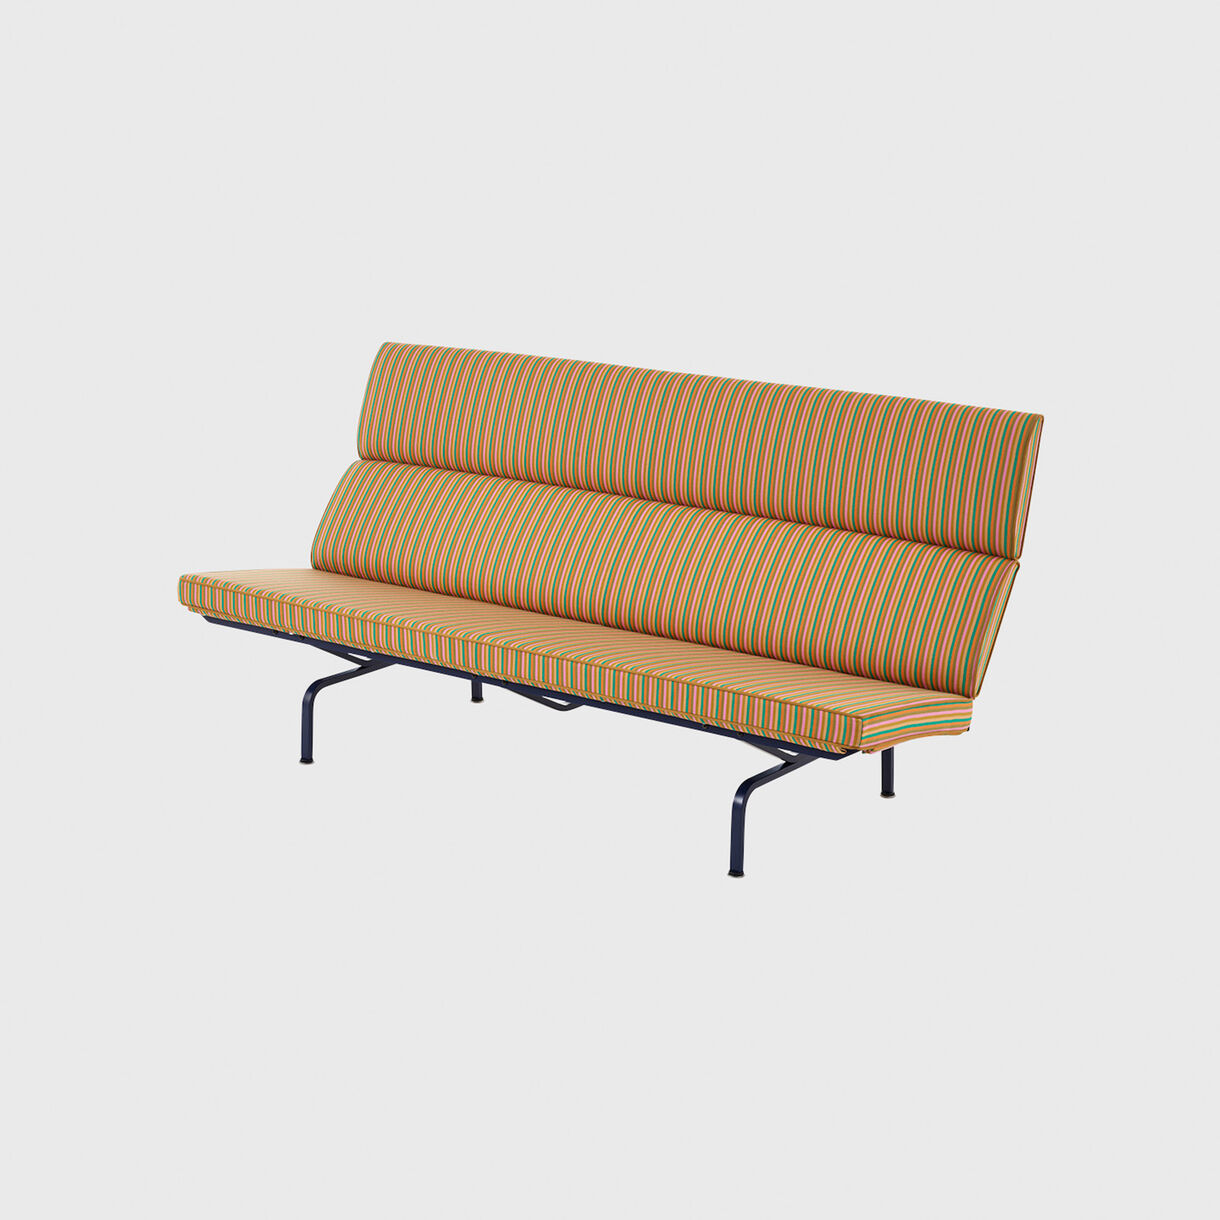 HM x HAY - Eames Sofa Compact